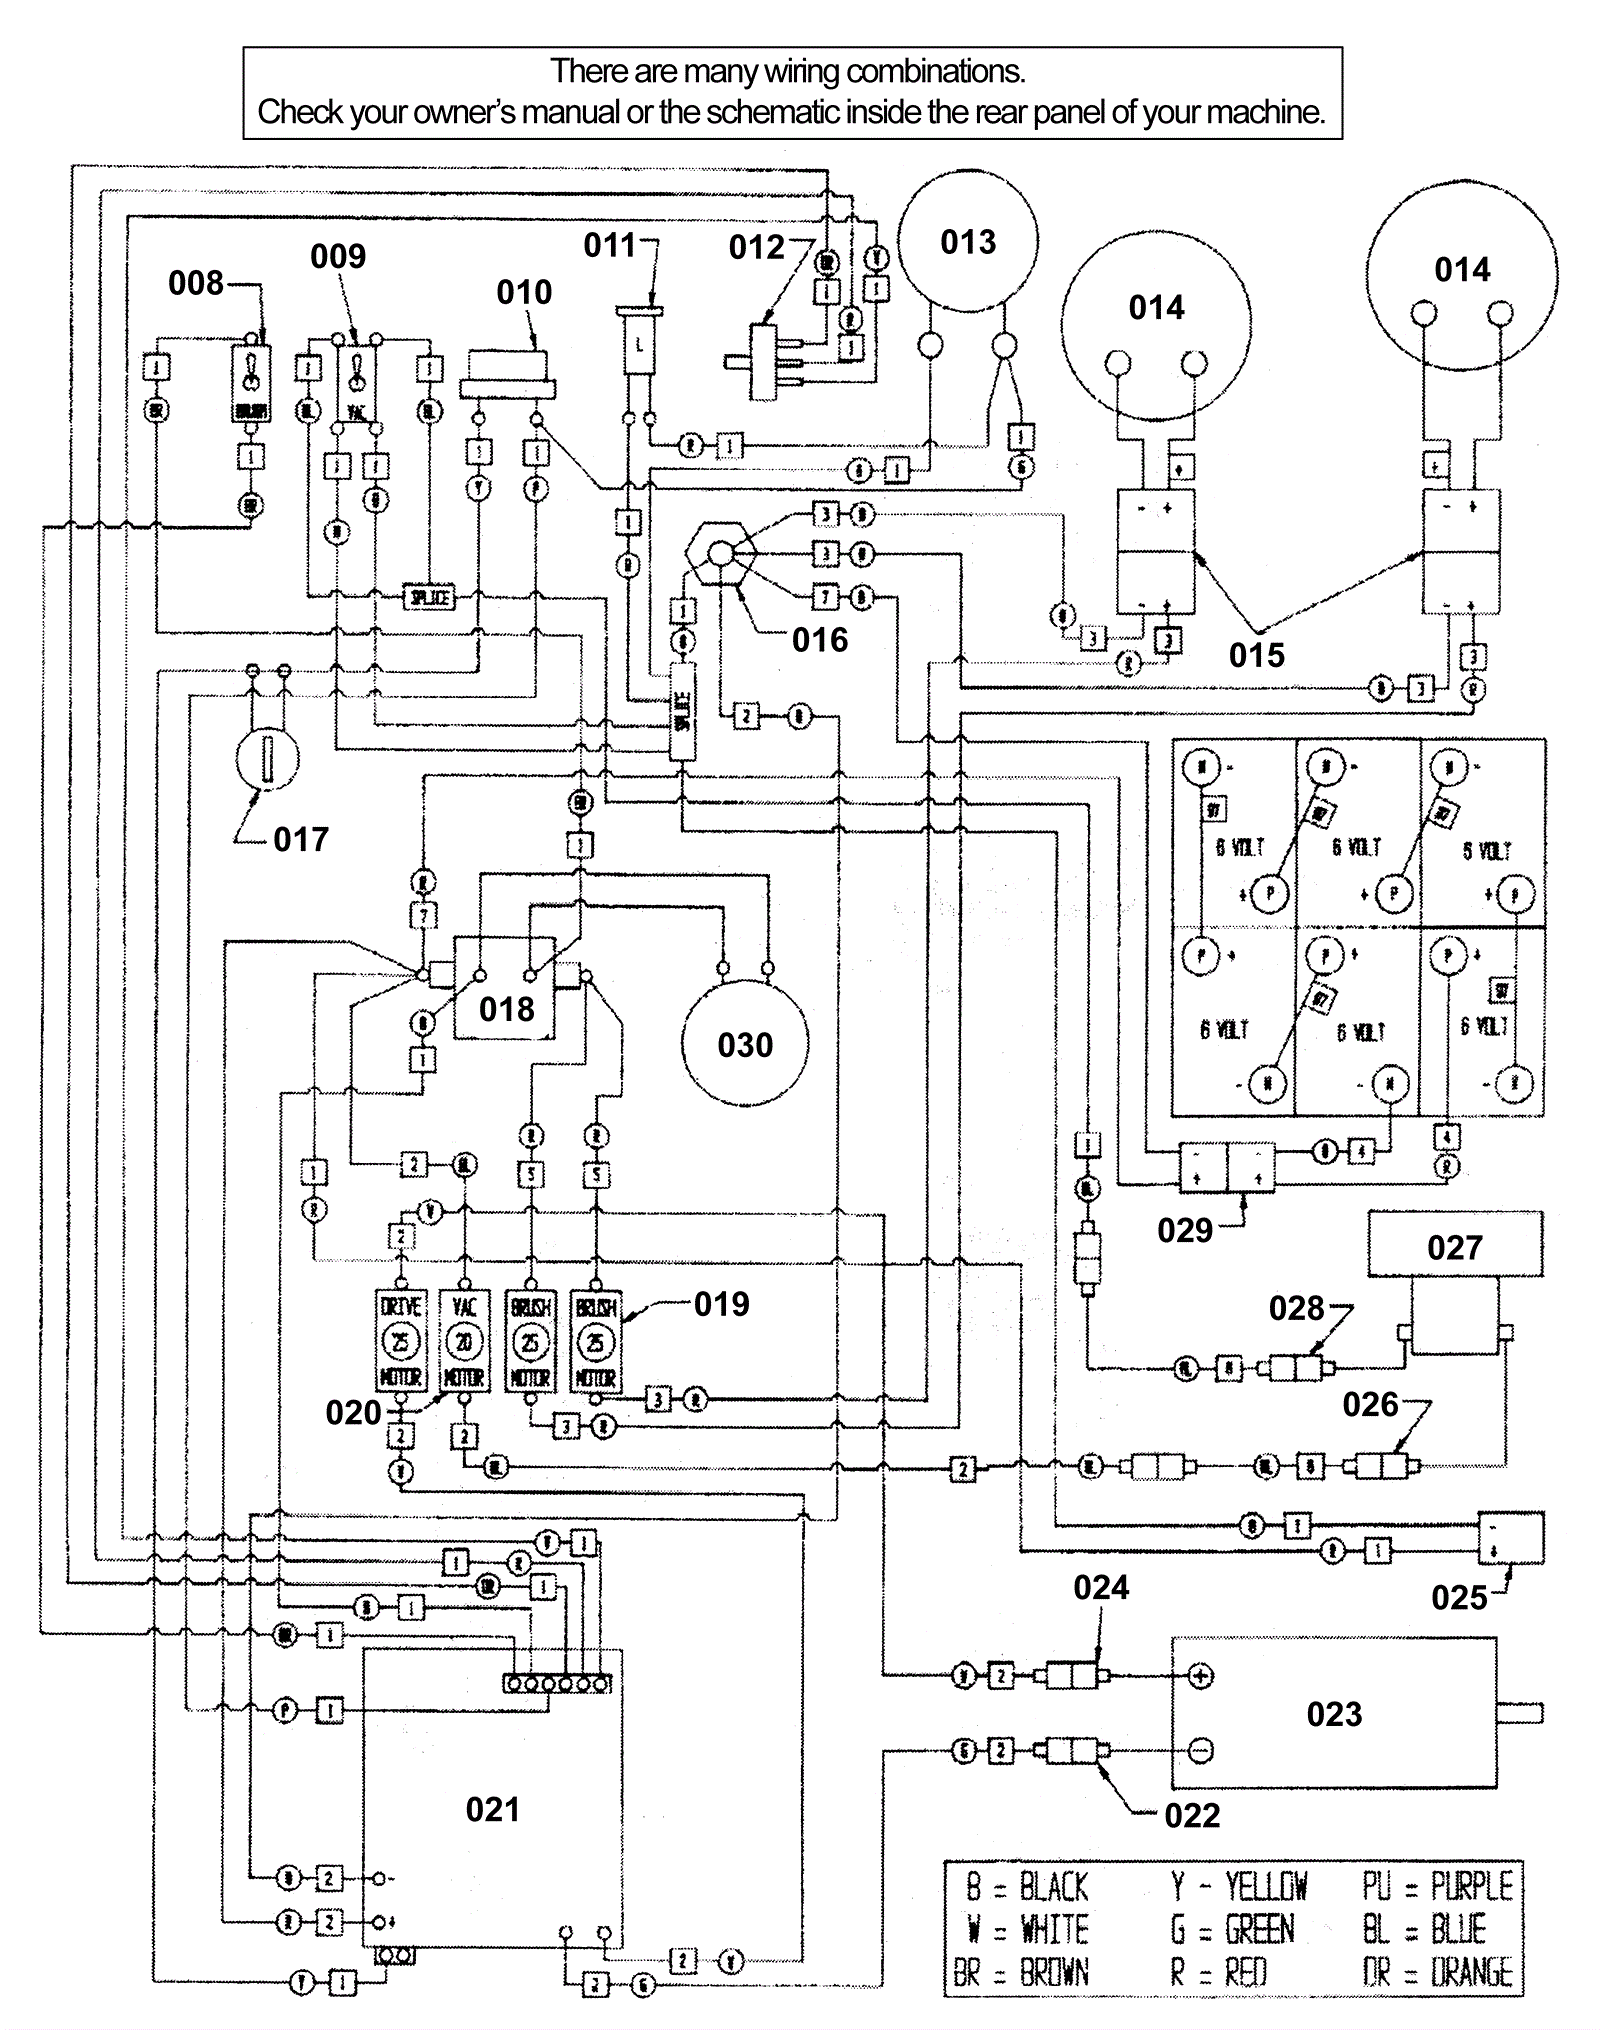 WRANGLER 27 F/B Wiring Diagram